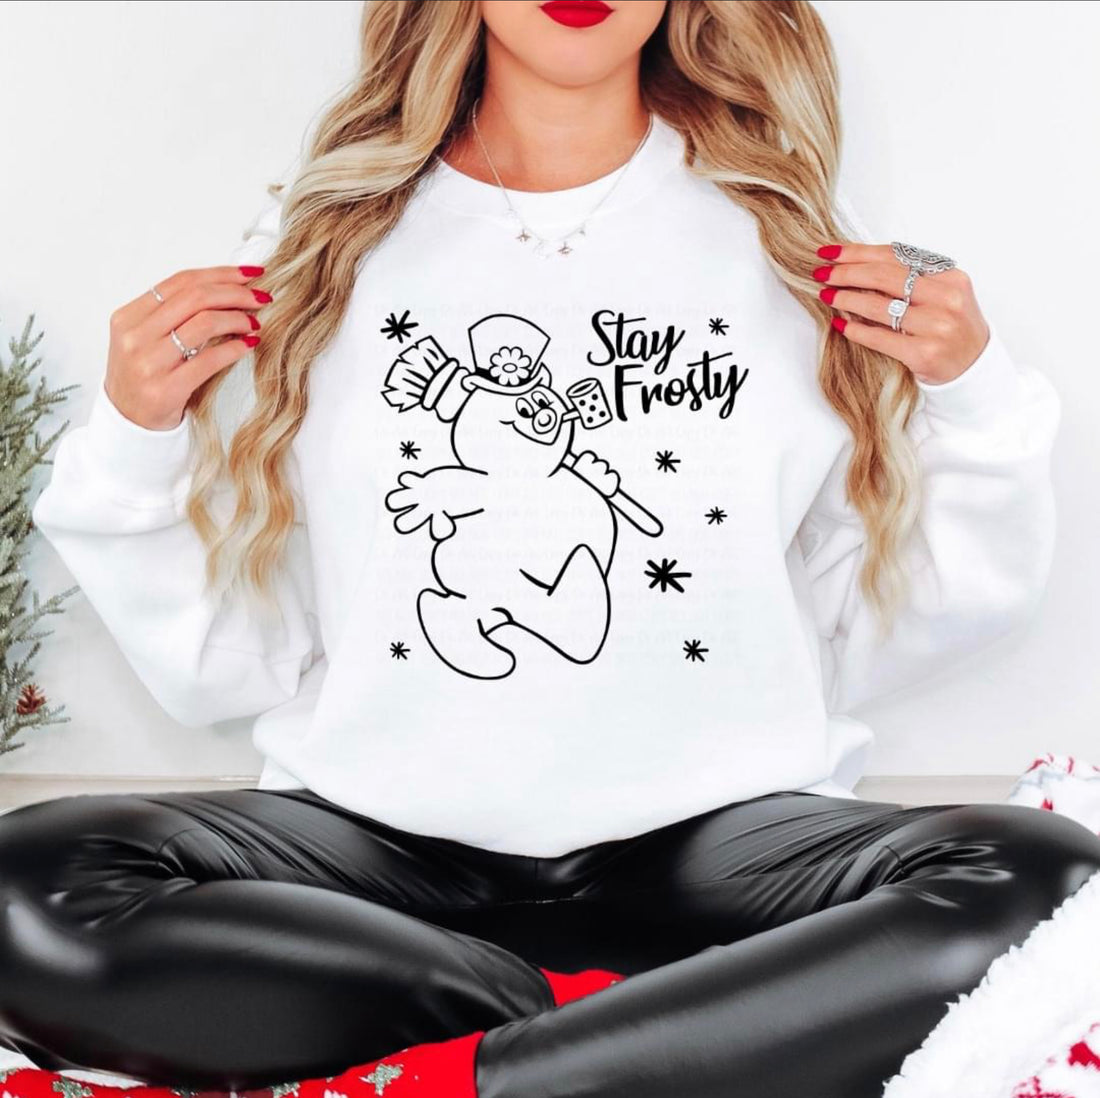 “Stay Frosty” Graphic Sweatshirt